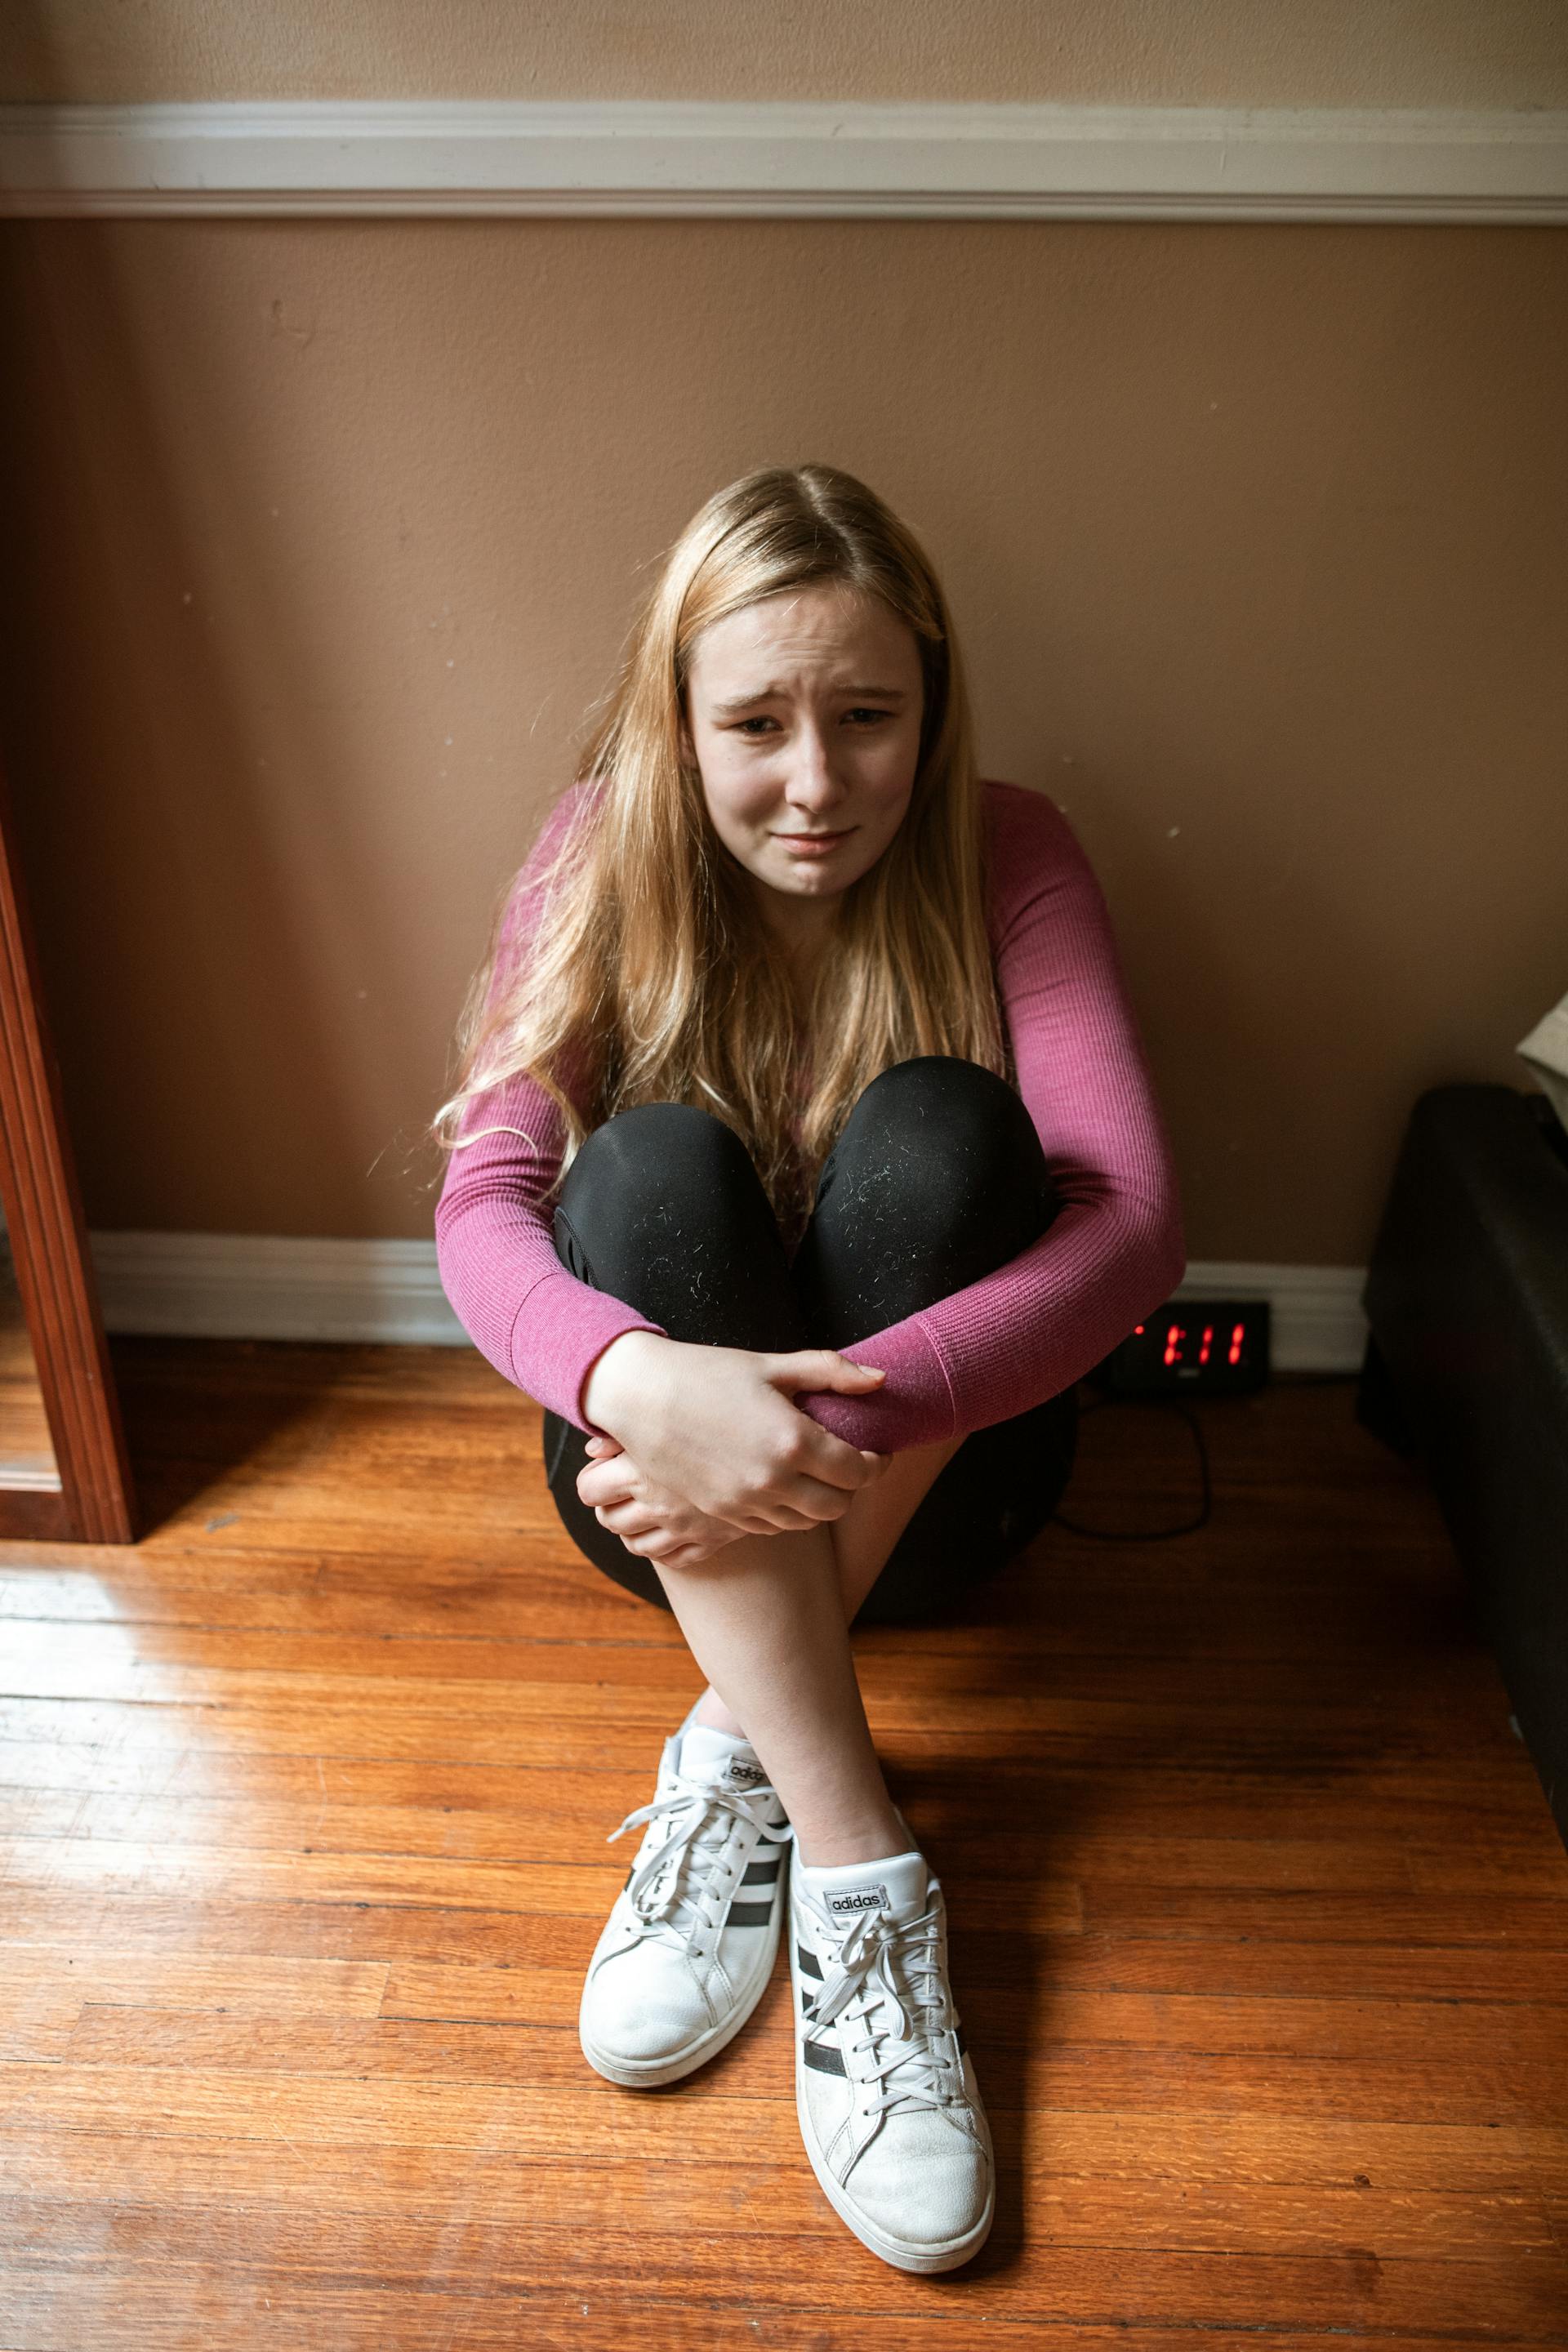 An emotional teen girl sitting on her living room floor | Source: Pexels